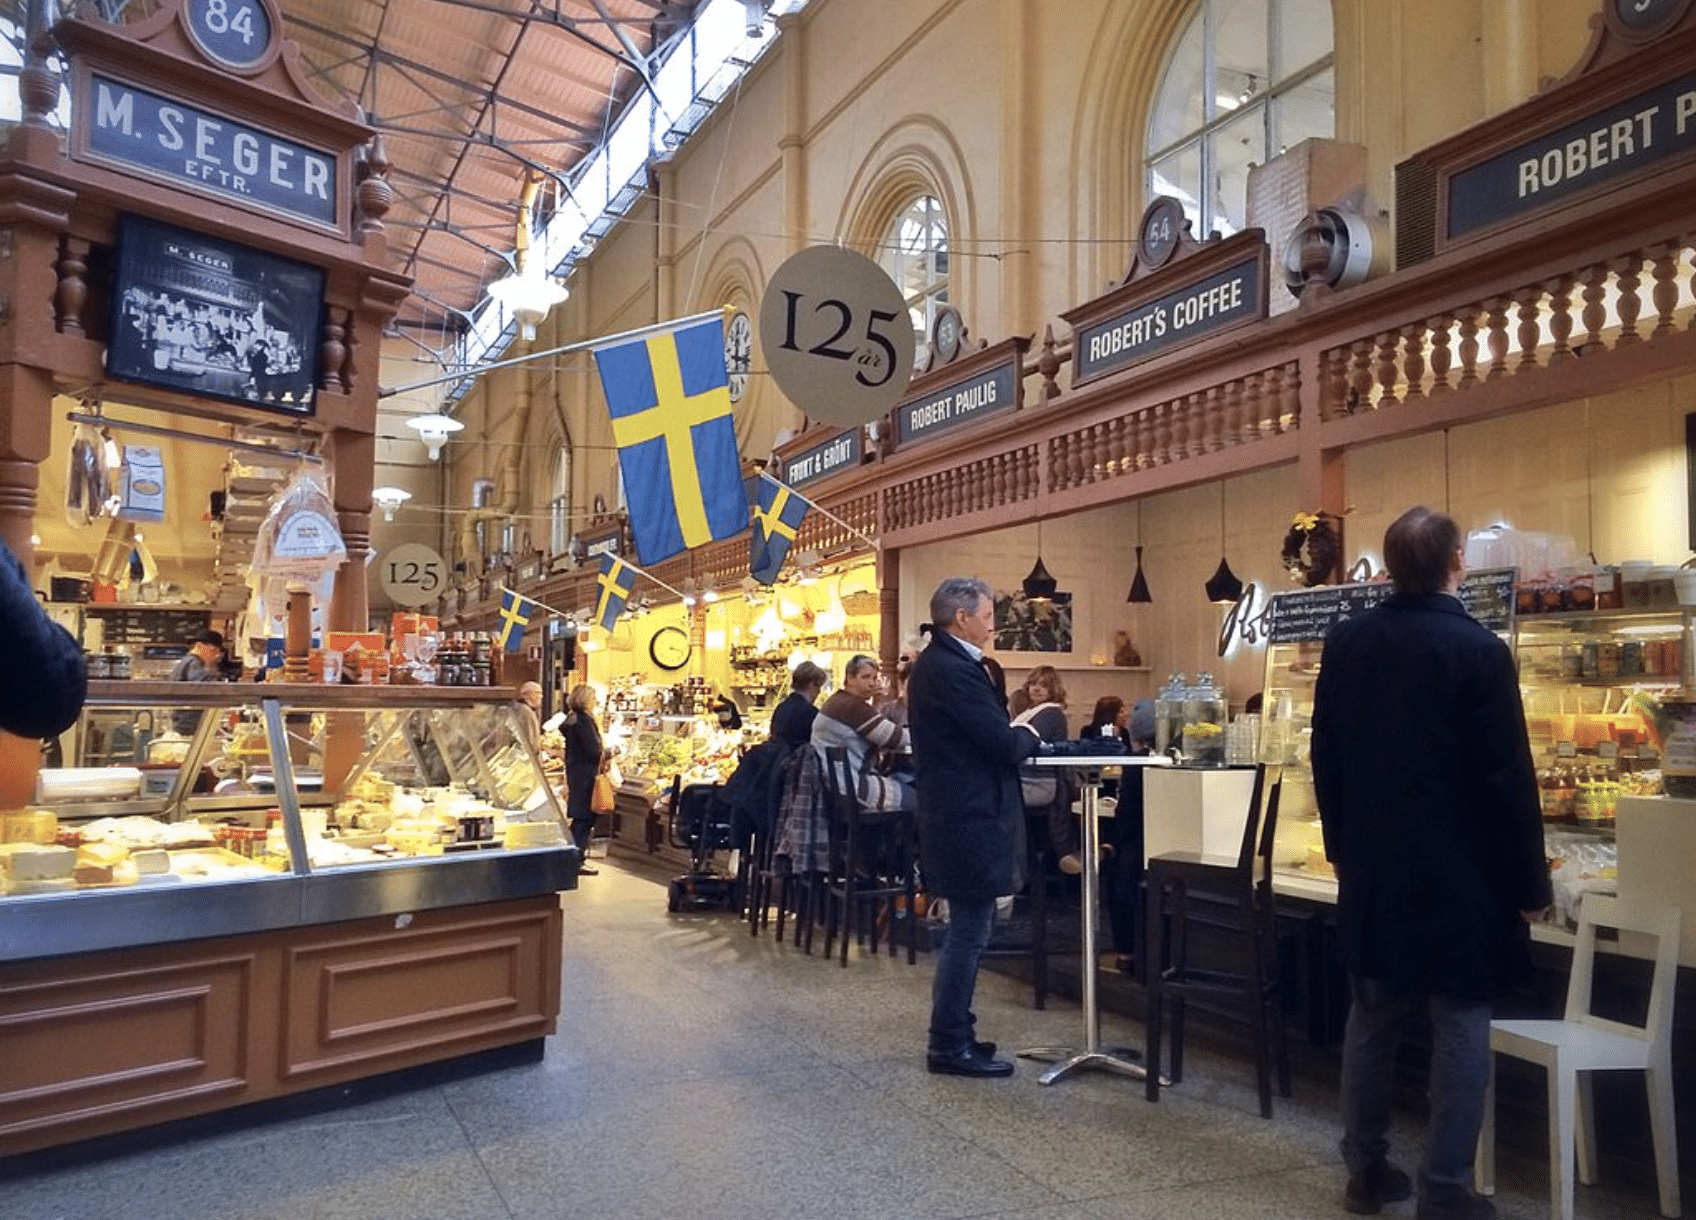 Östermalm Market Hall photo by Sharon Hahn Darlin, Creative Commons LIcense. Via Wikimedia